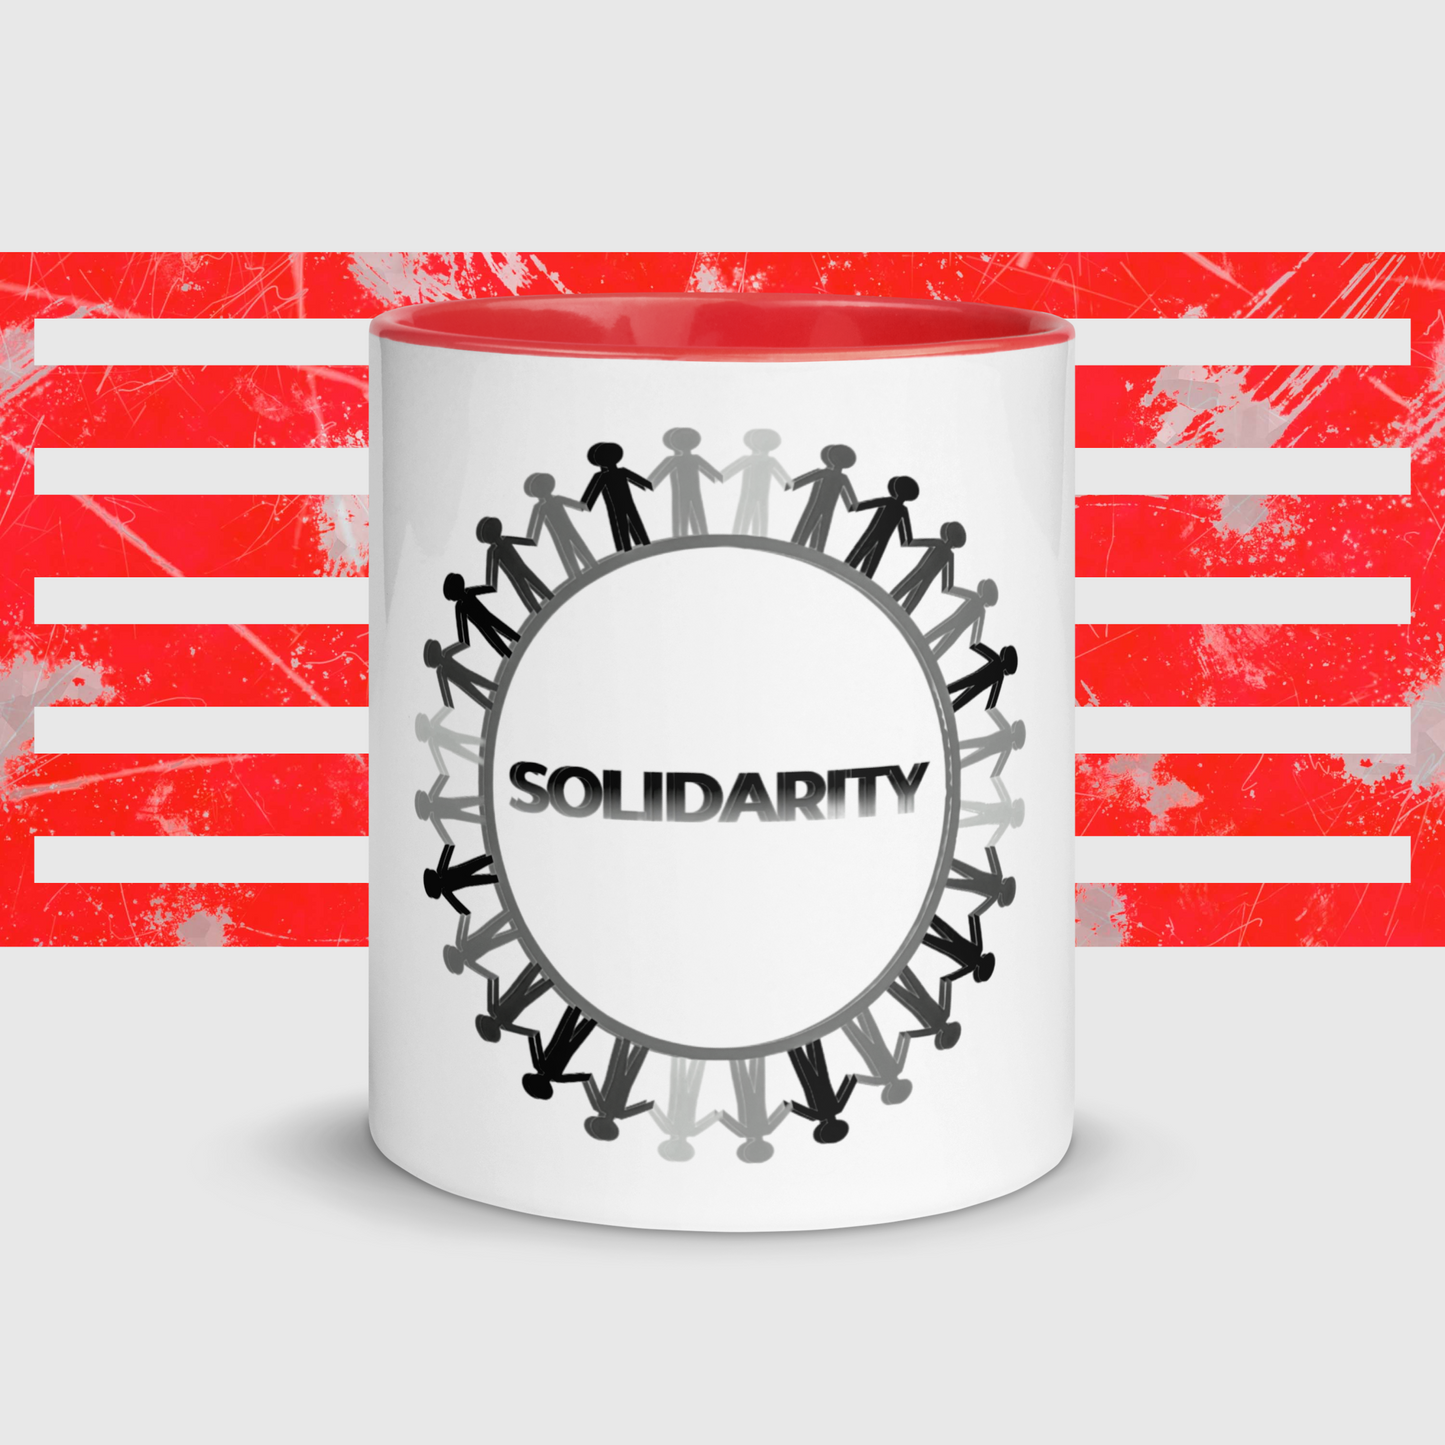 Solidarity Mug red inside and handle